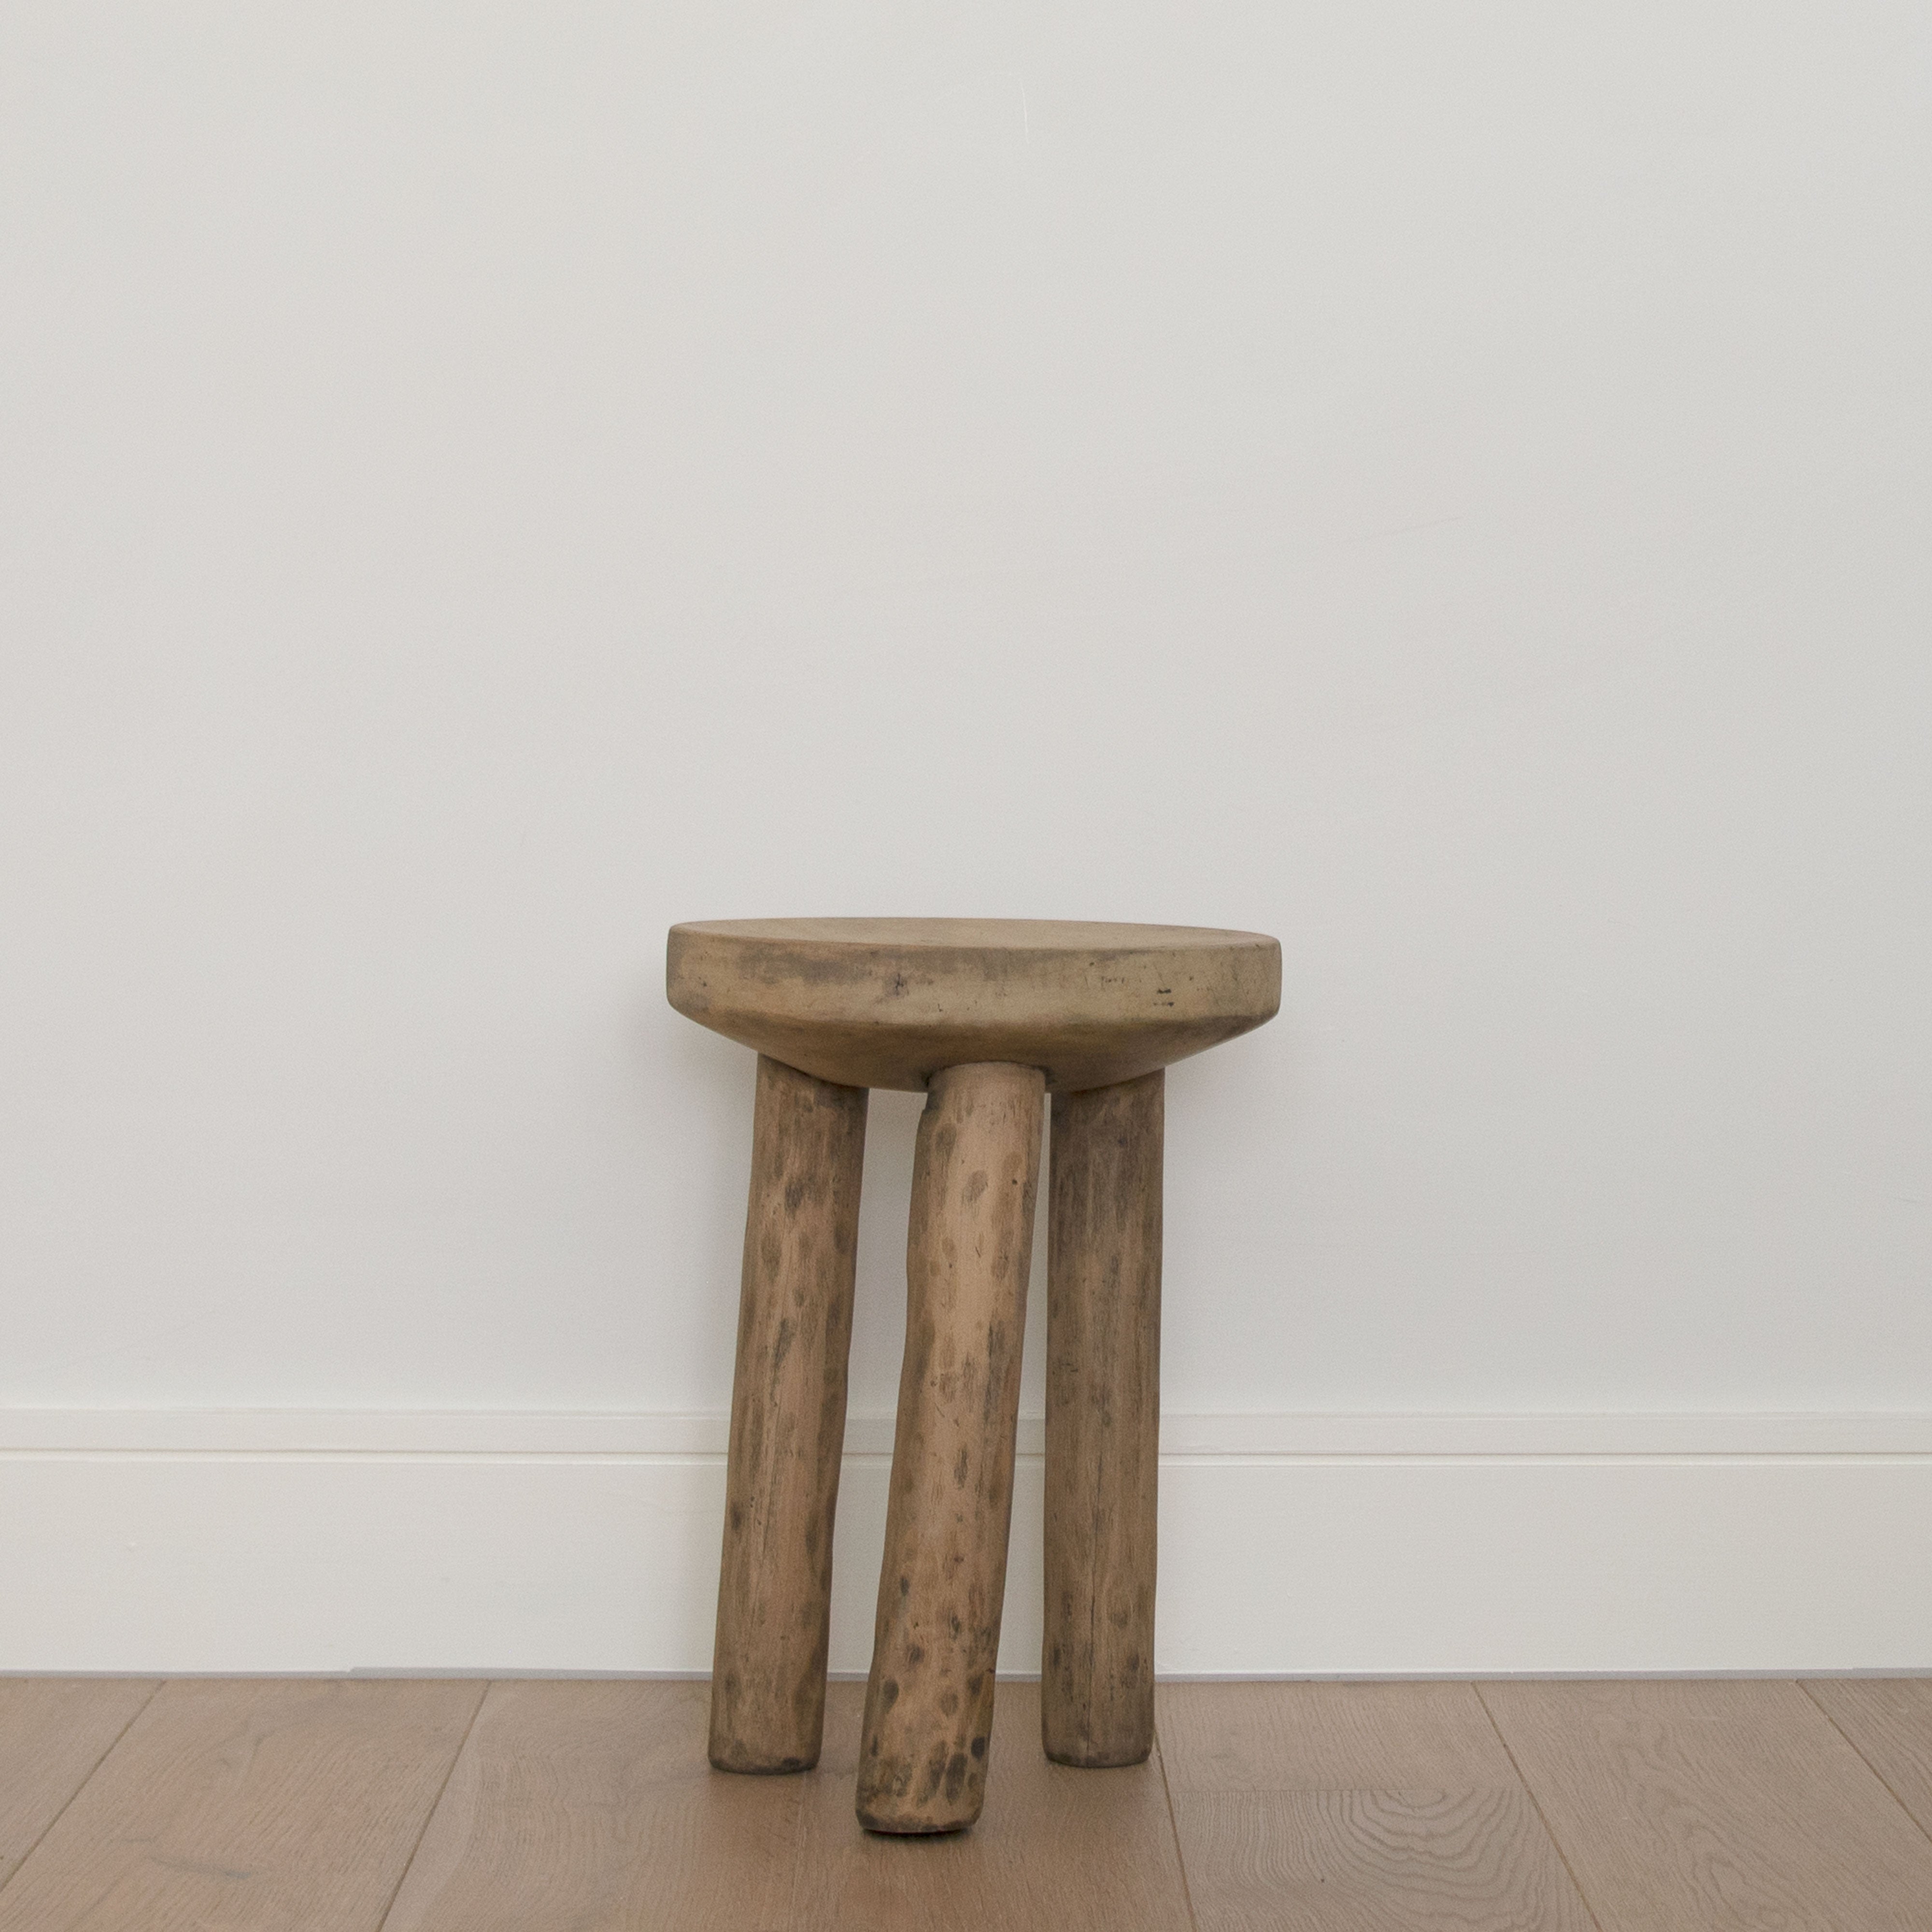 Handmade Arden wooden side table